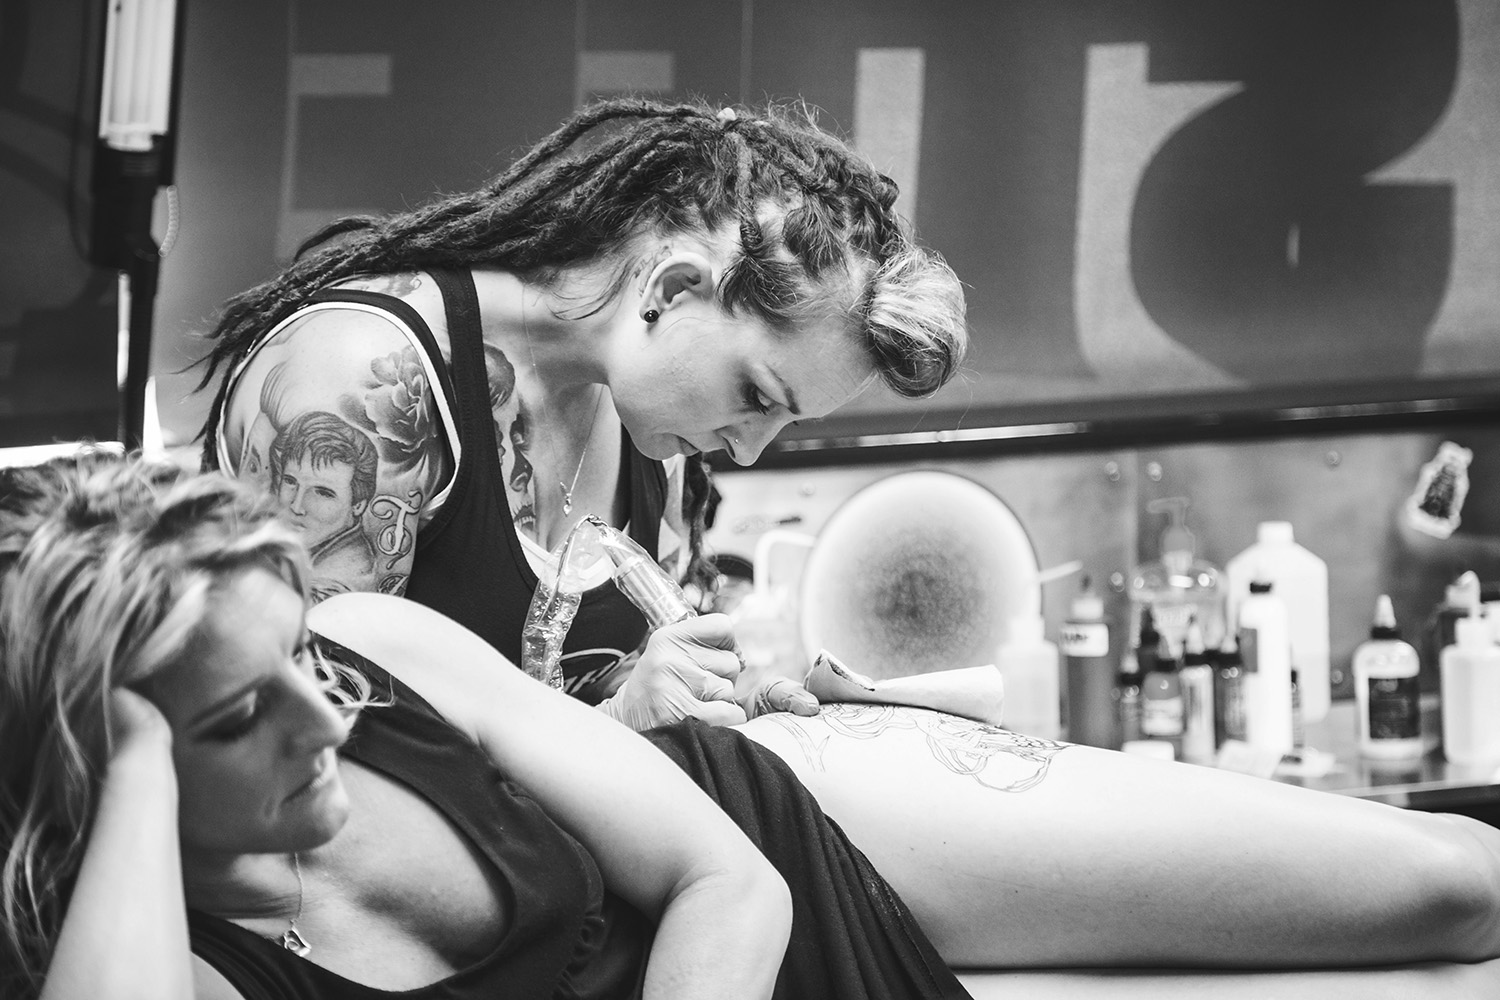 An artist tattooing a woman’s backside